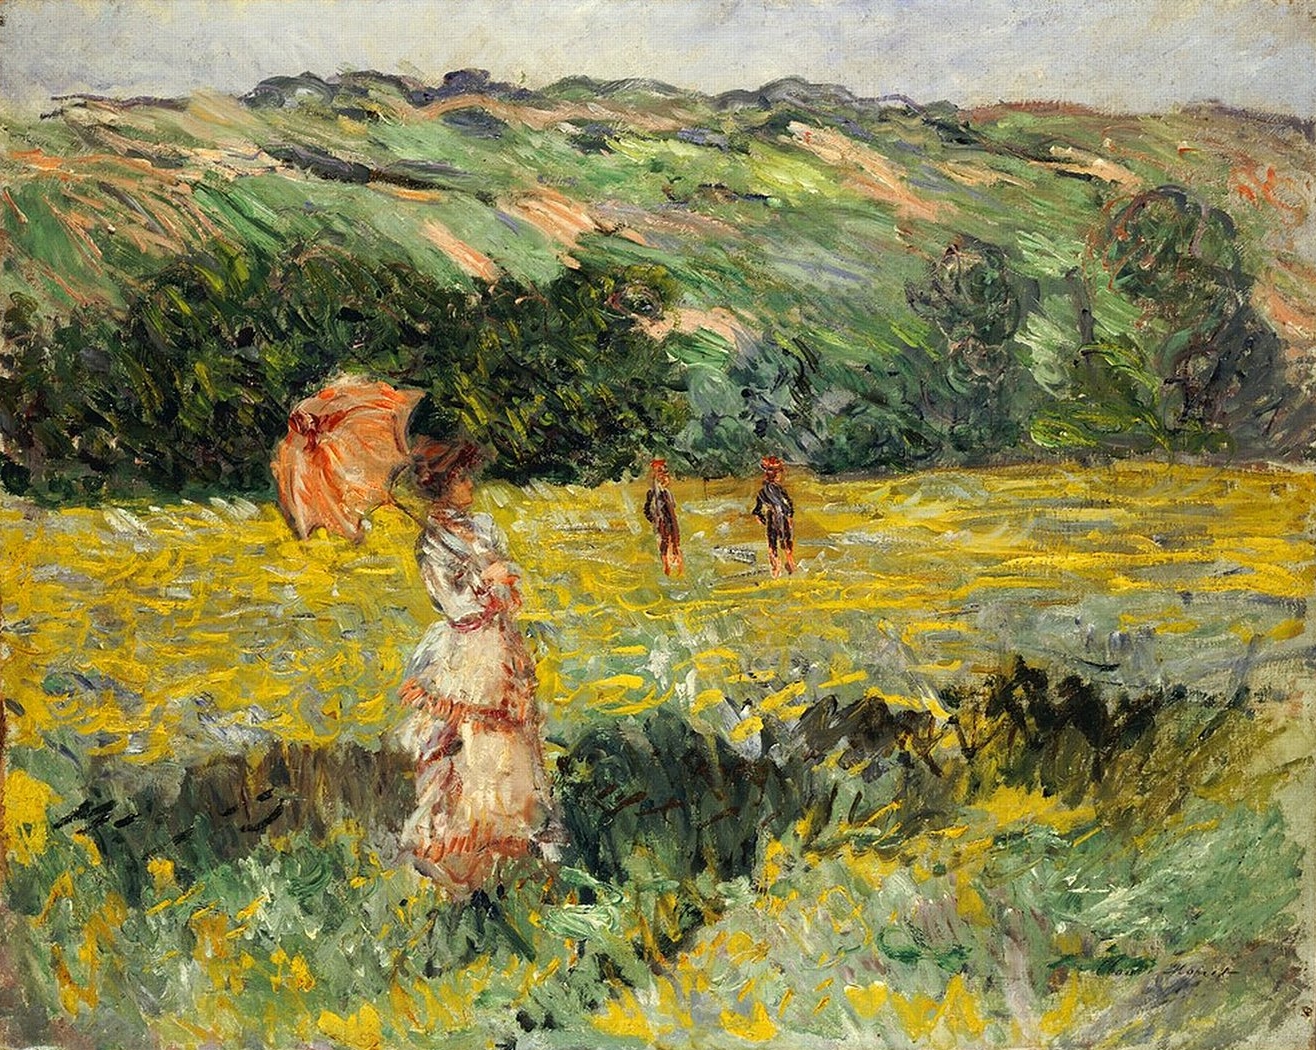 Claude+Monet-1840-1926 (597).jpg